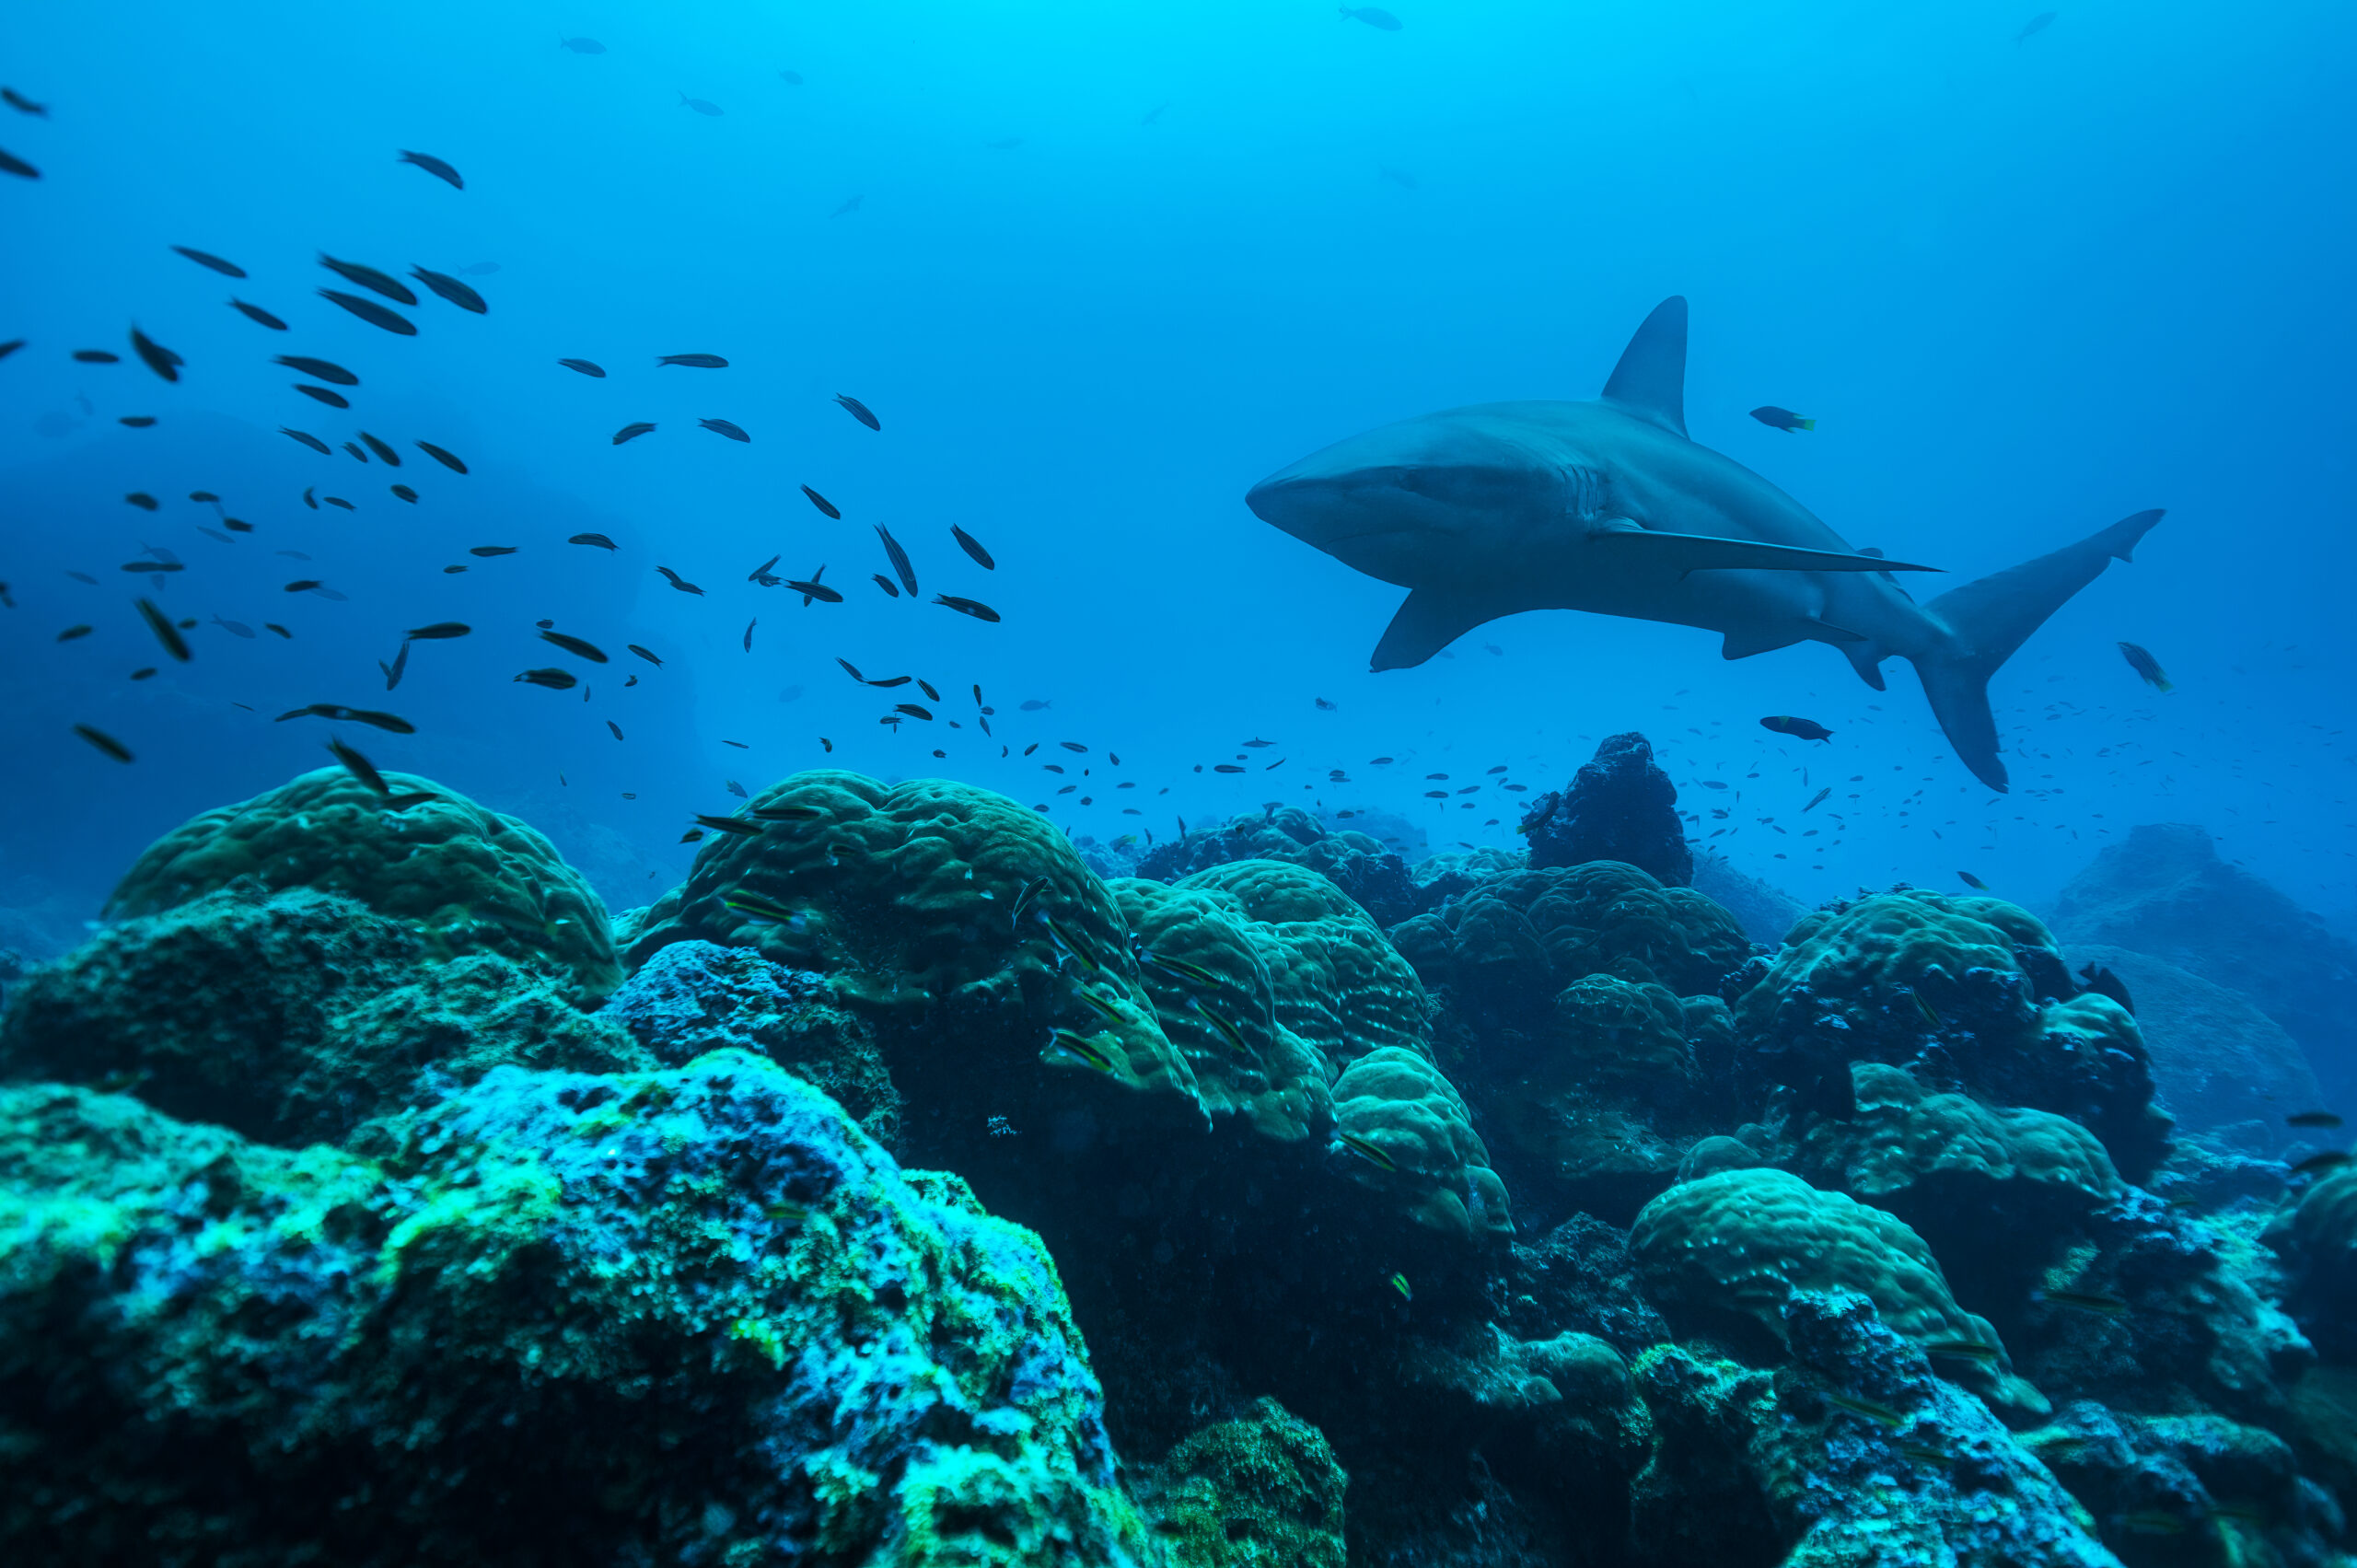 A Galápagos shark patrols the reefs of the
Galápagos Islands Hope Spot.